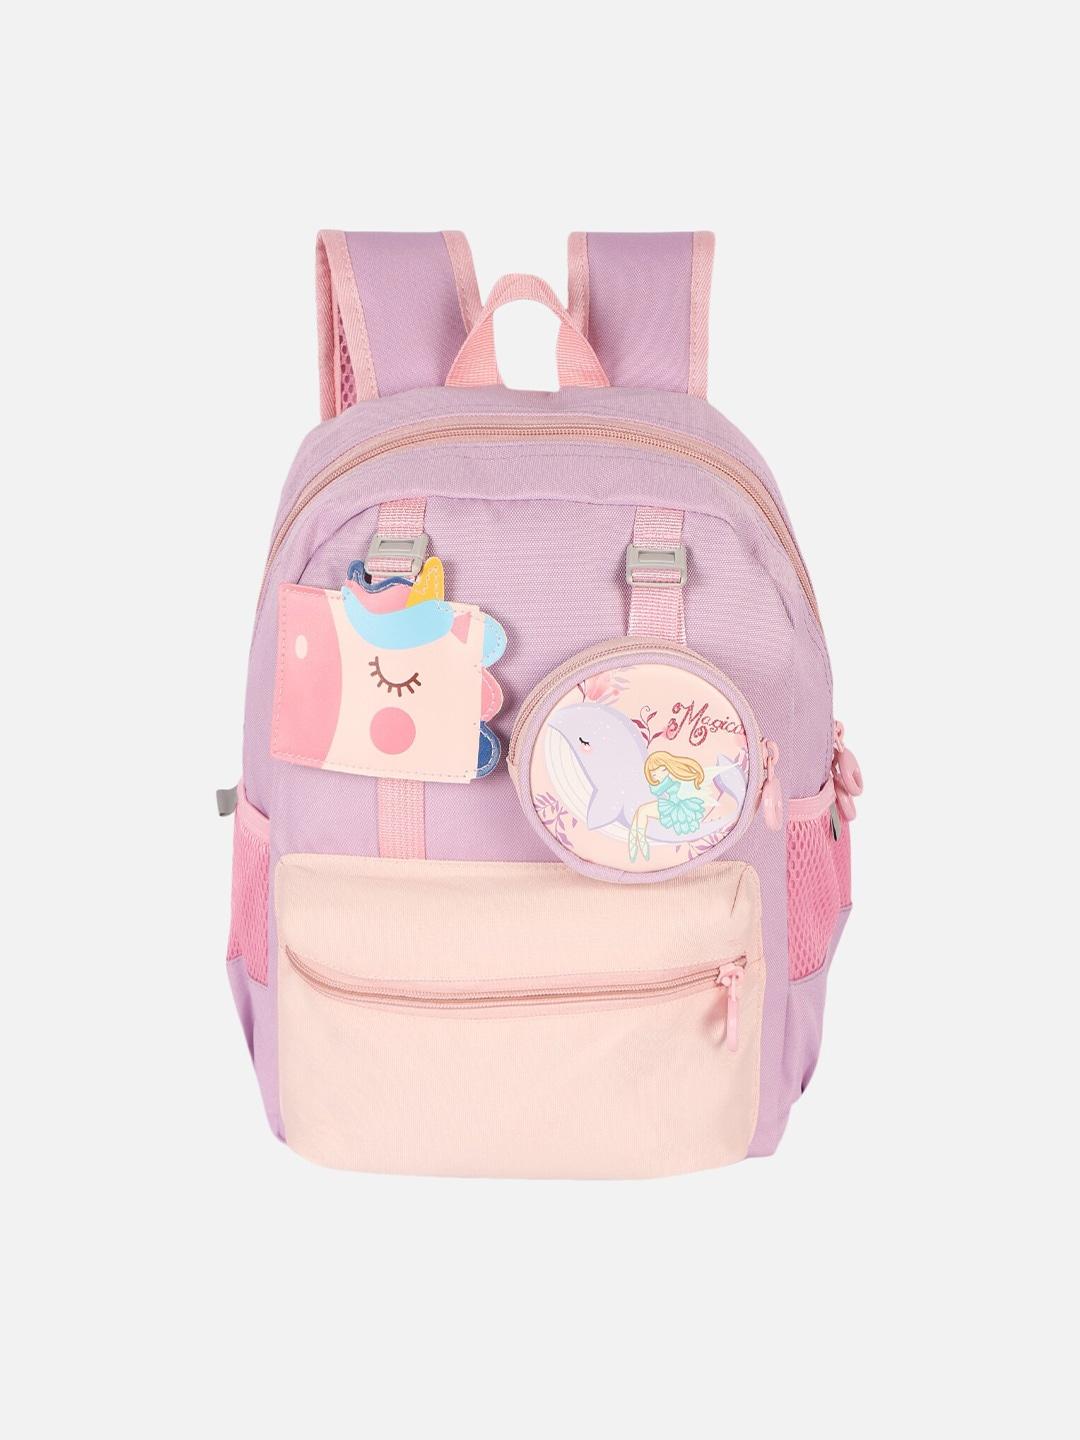 passion petals girls unicorn school backpack